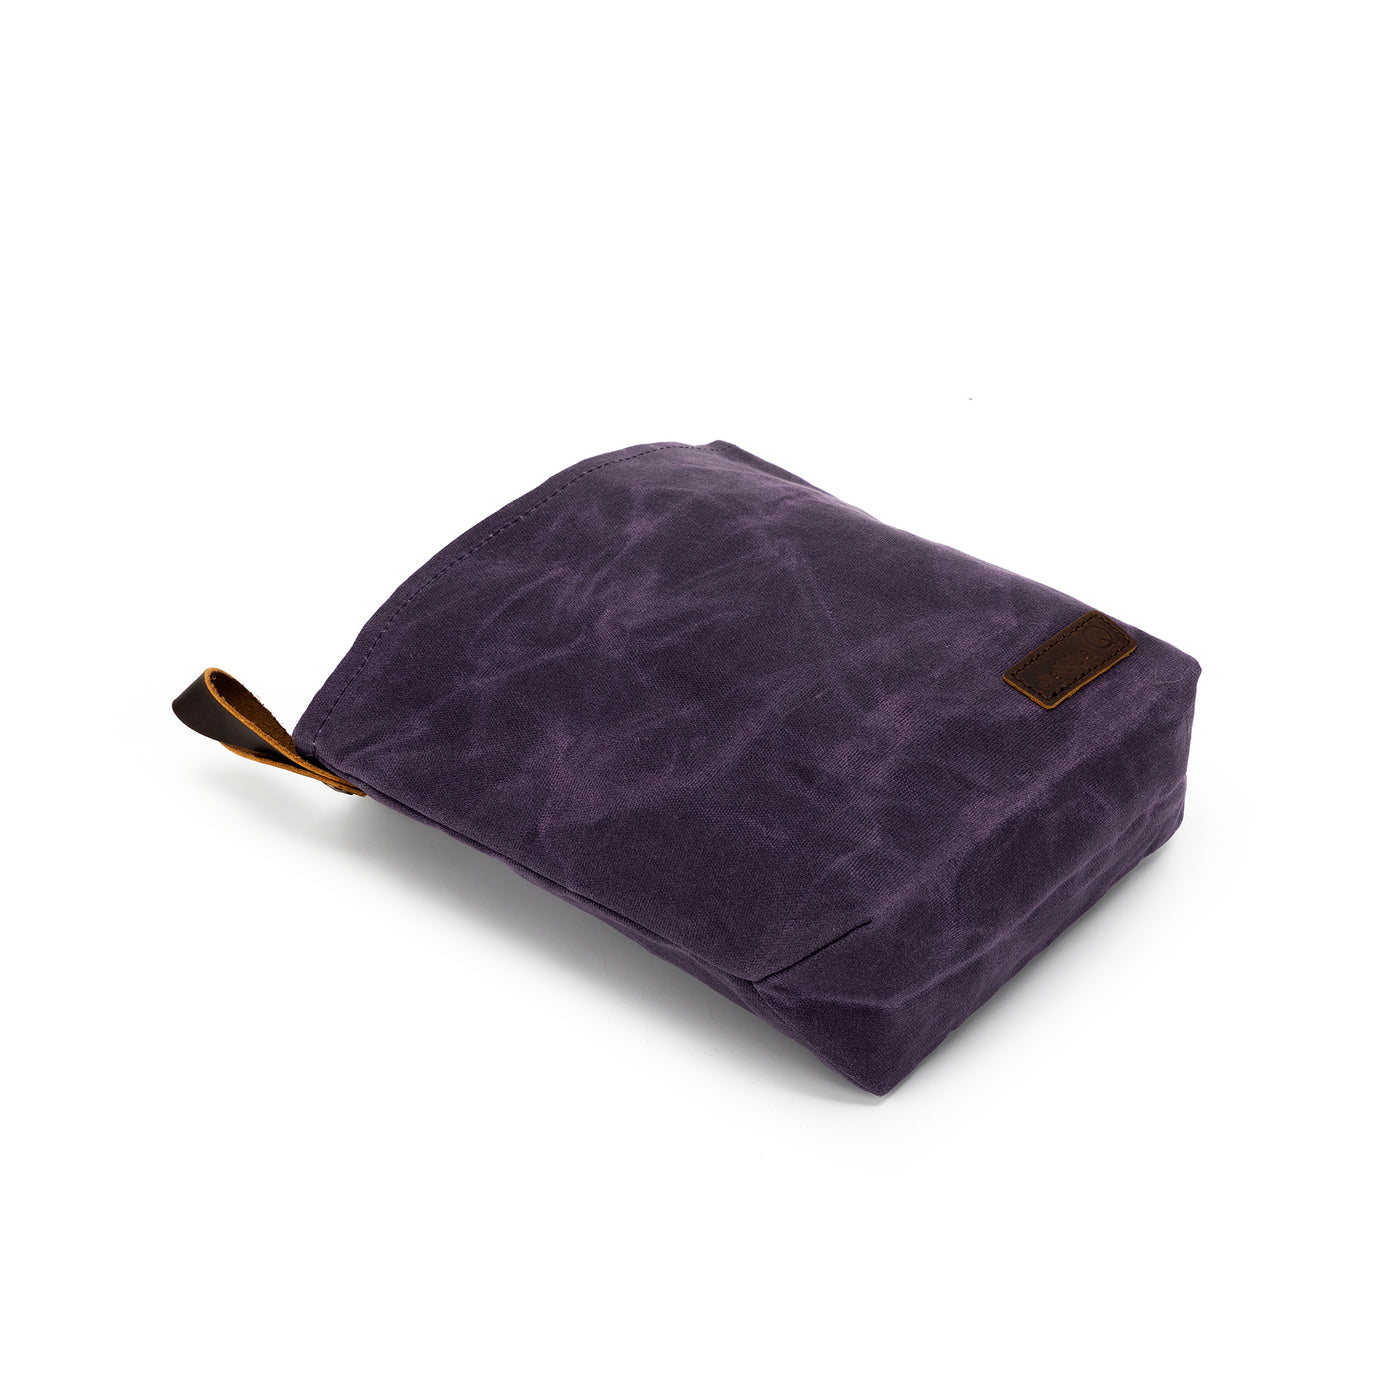 Maker's Canvas Knit Sacks (Set of 2) | Purple